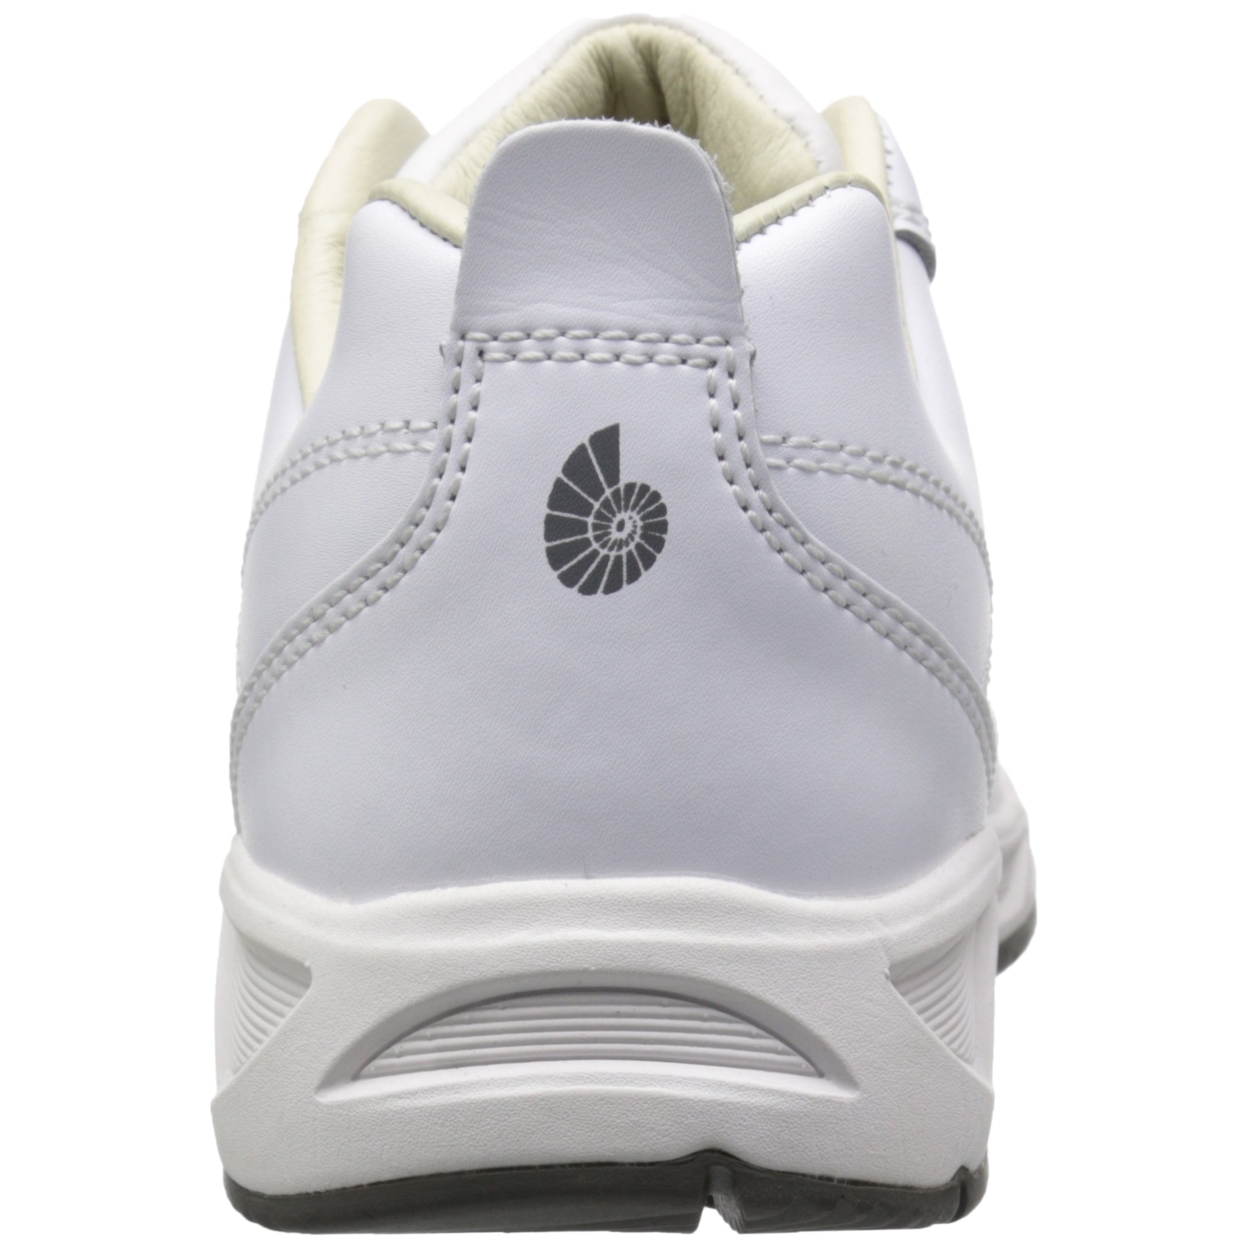 FSI FOOTWEAR SPECIALTIES INTERNATIONAL NAUTILUS Nautilus 4046 ESD No Exposed Metal Soft Toe Clean Room Athletic Shoe WHITE - WHITE, 10-M